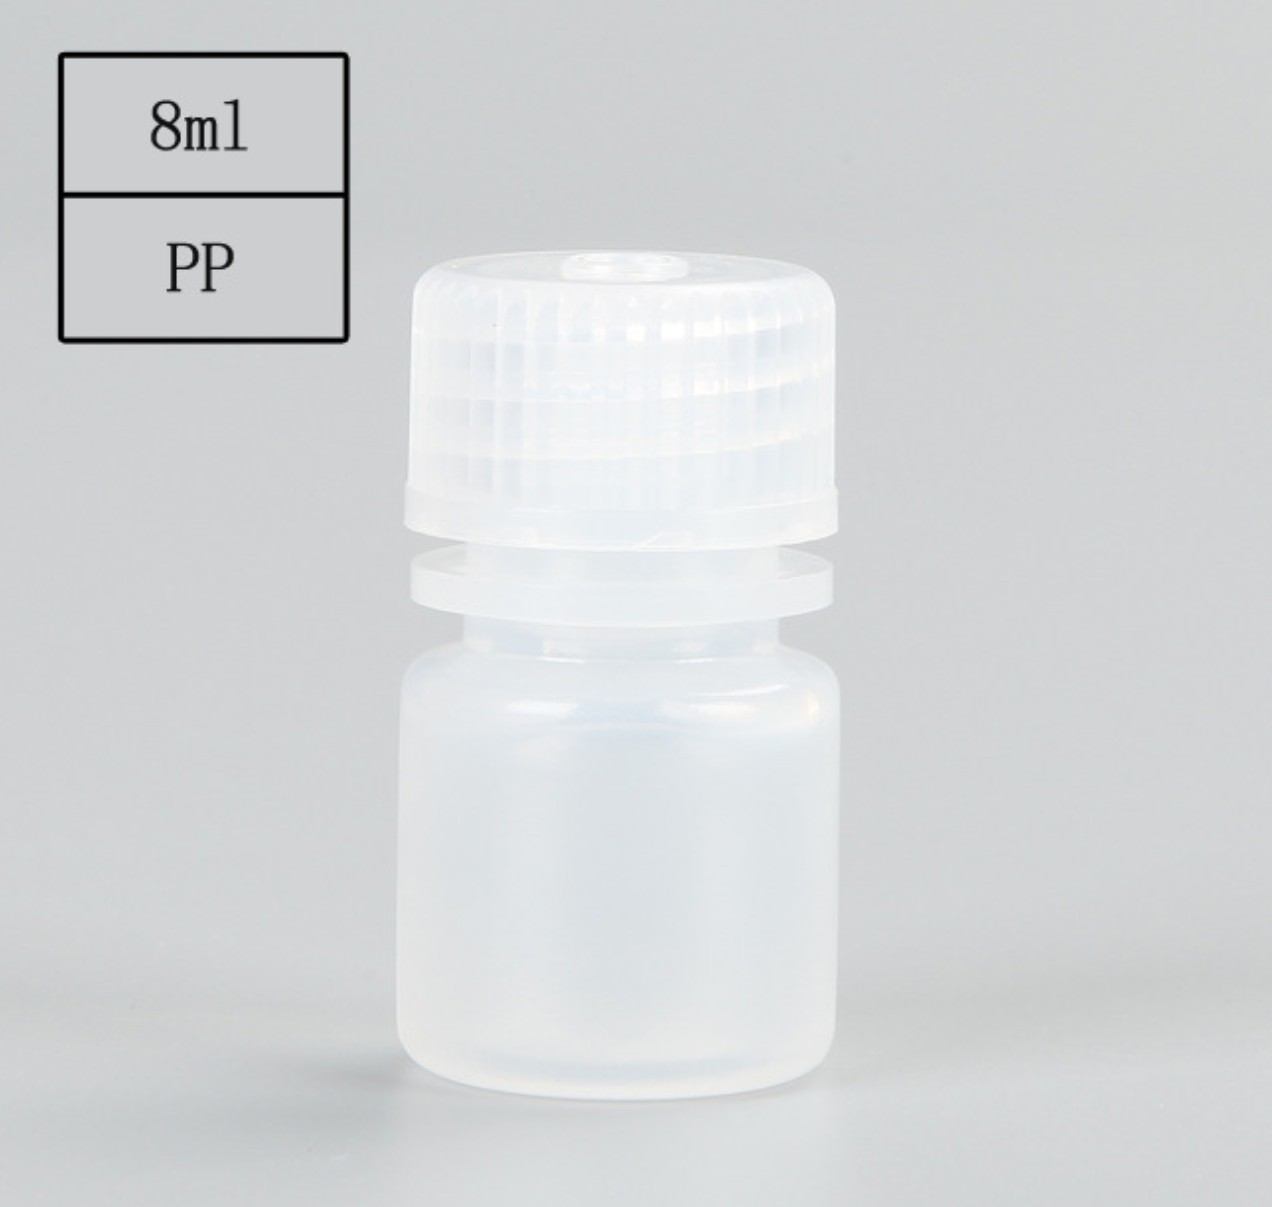 8ml Plastic Reagent Bottles Featured Image